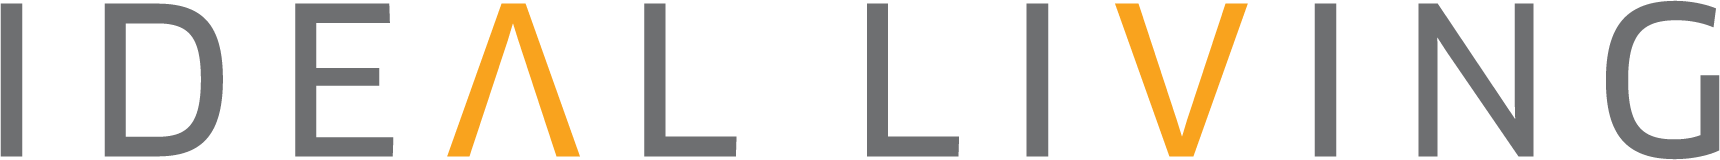 Ideal Living Logo